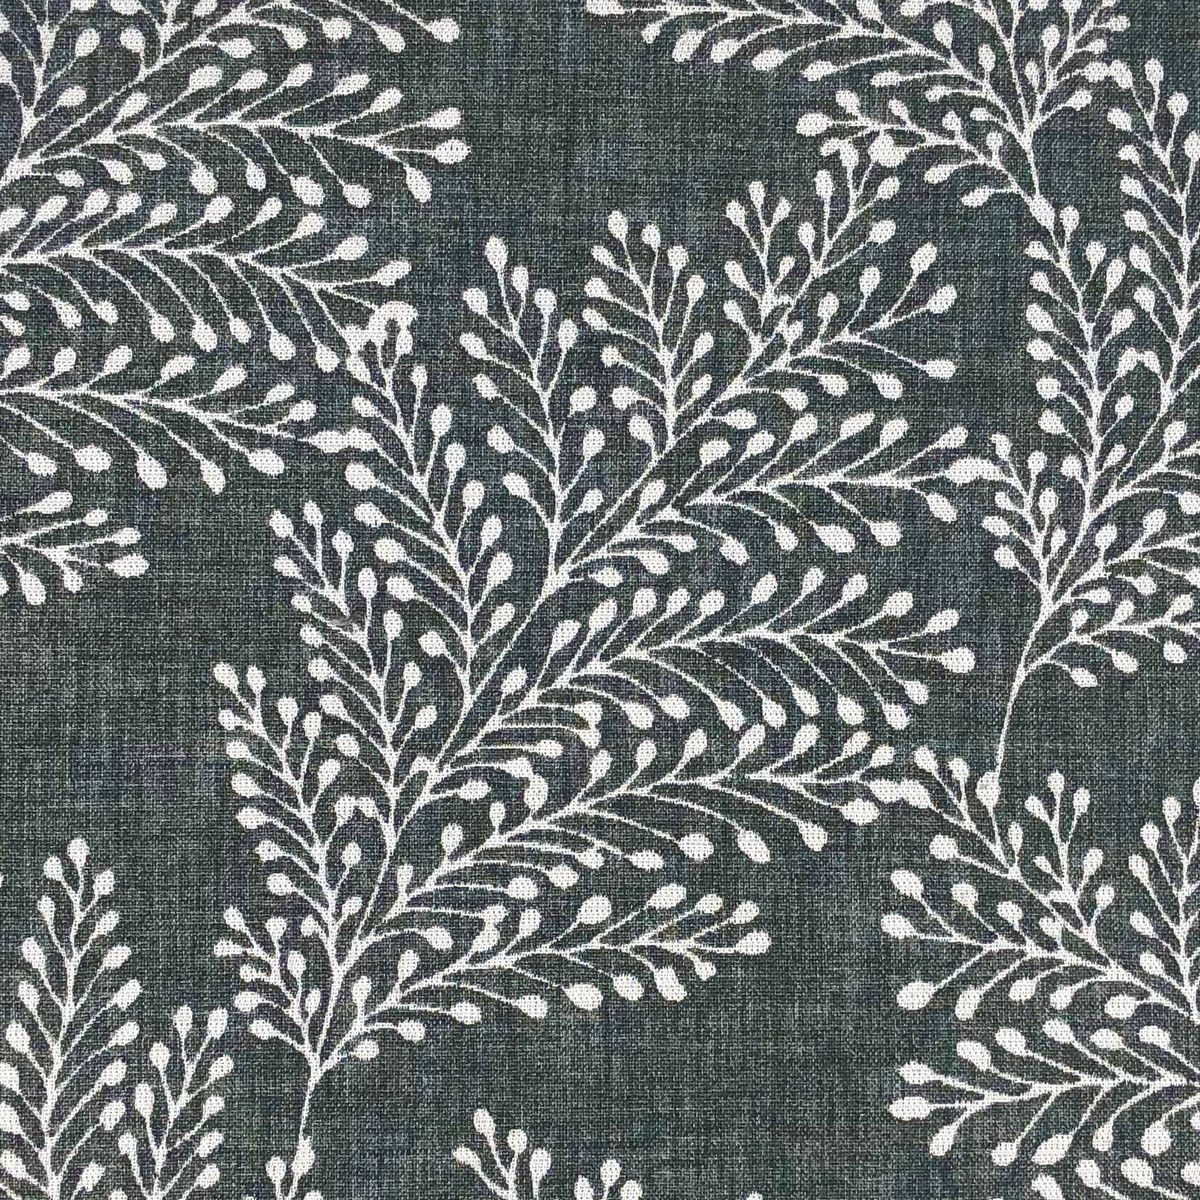 Kensington Charcoal Fabric by Chatham Glyn